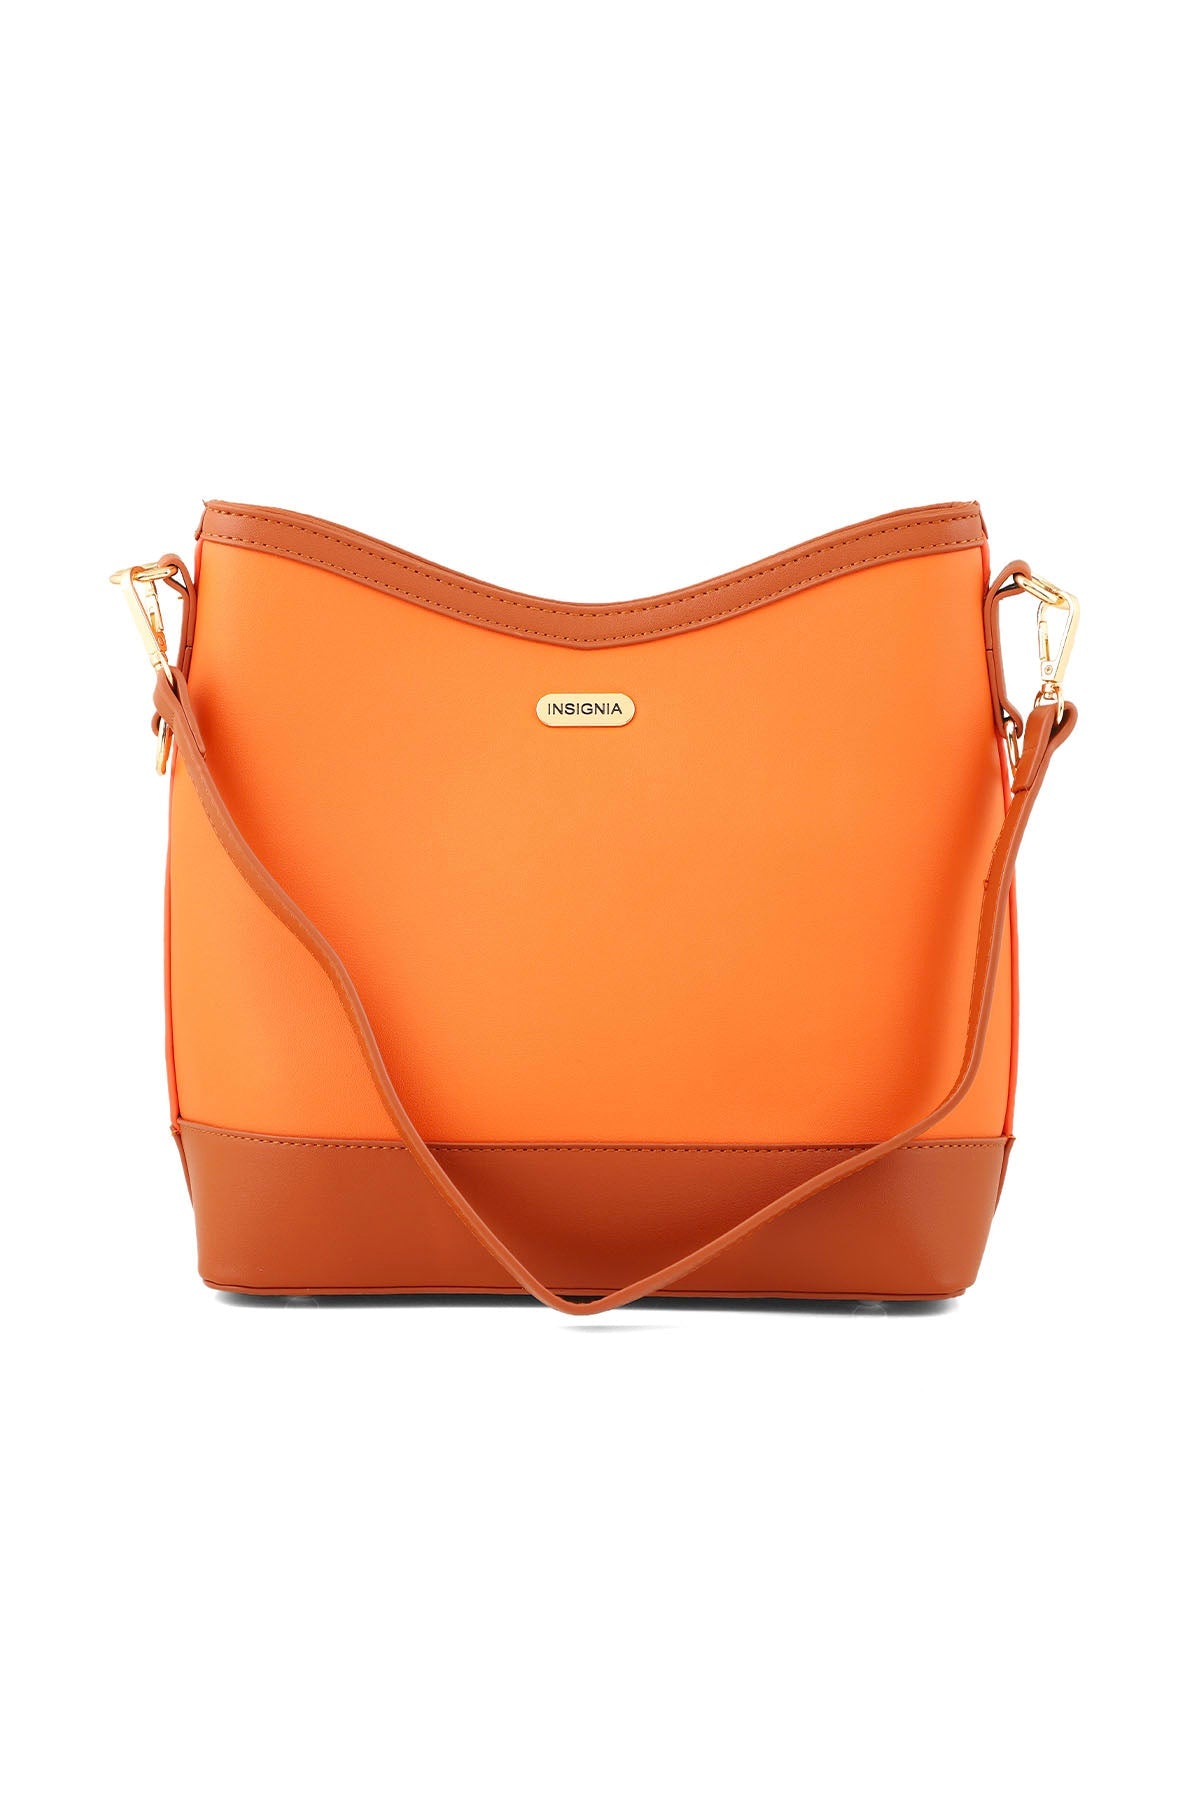 Bucket Hand Bags B15130-Orange